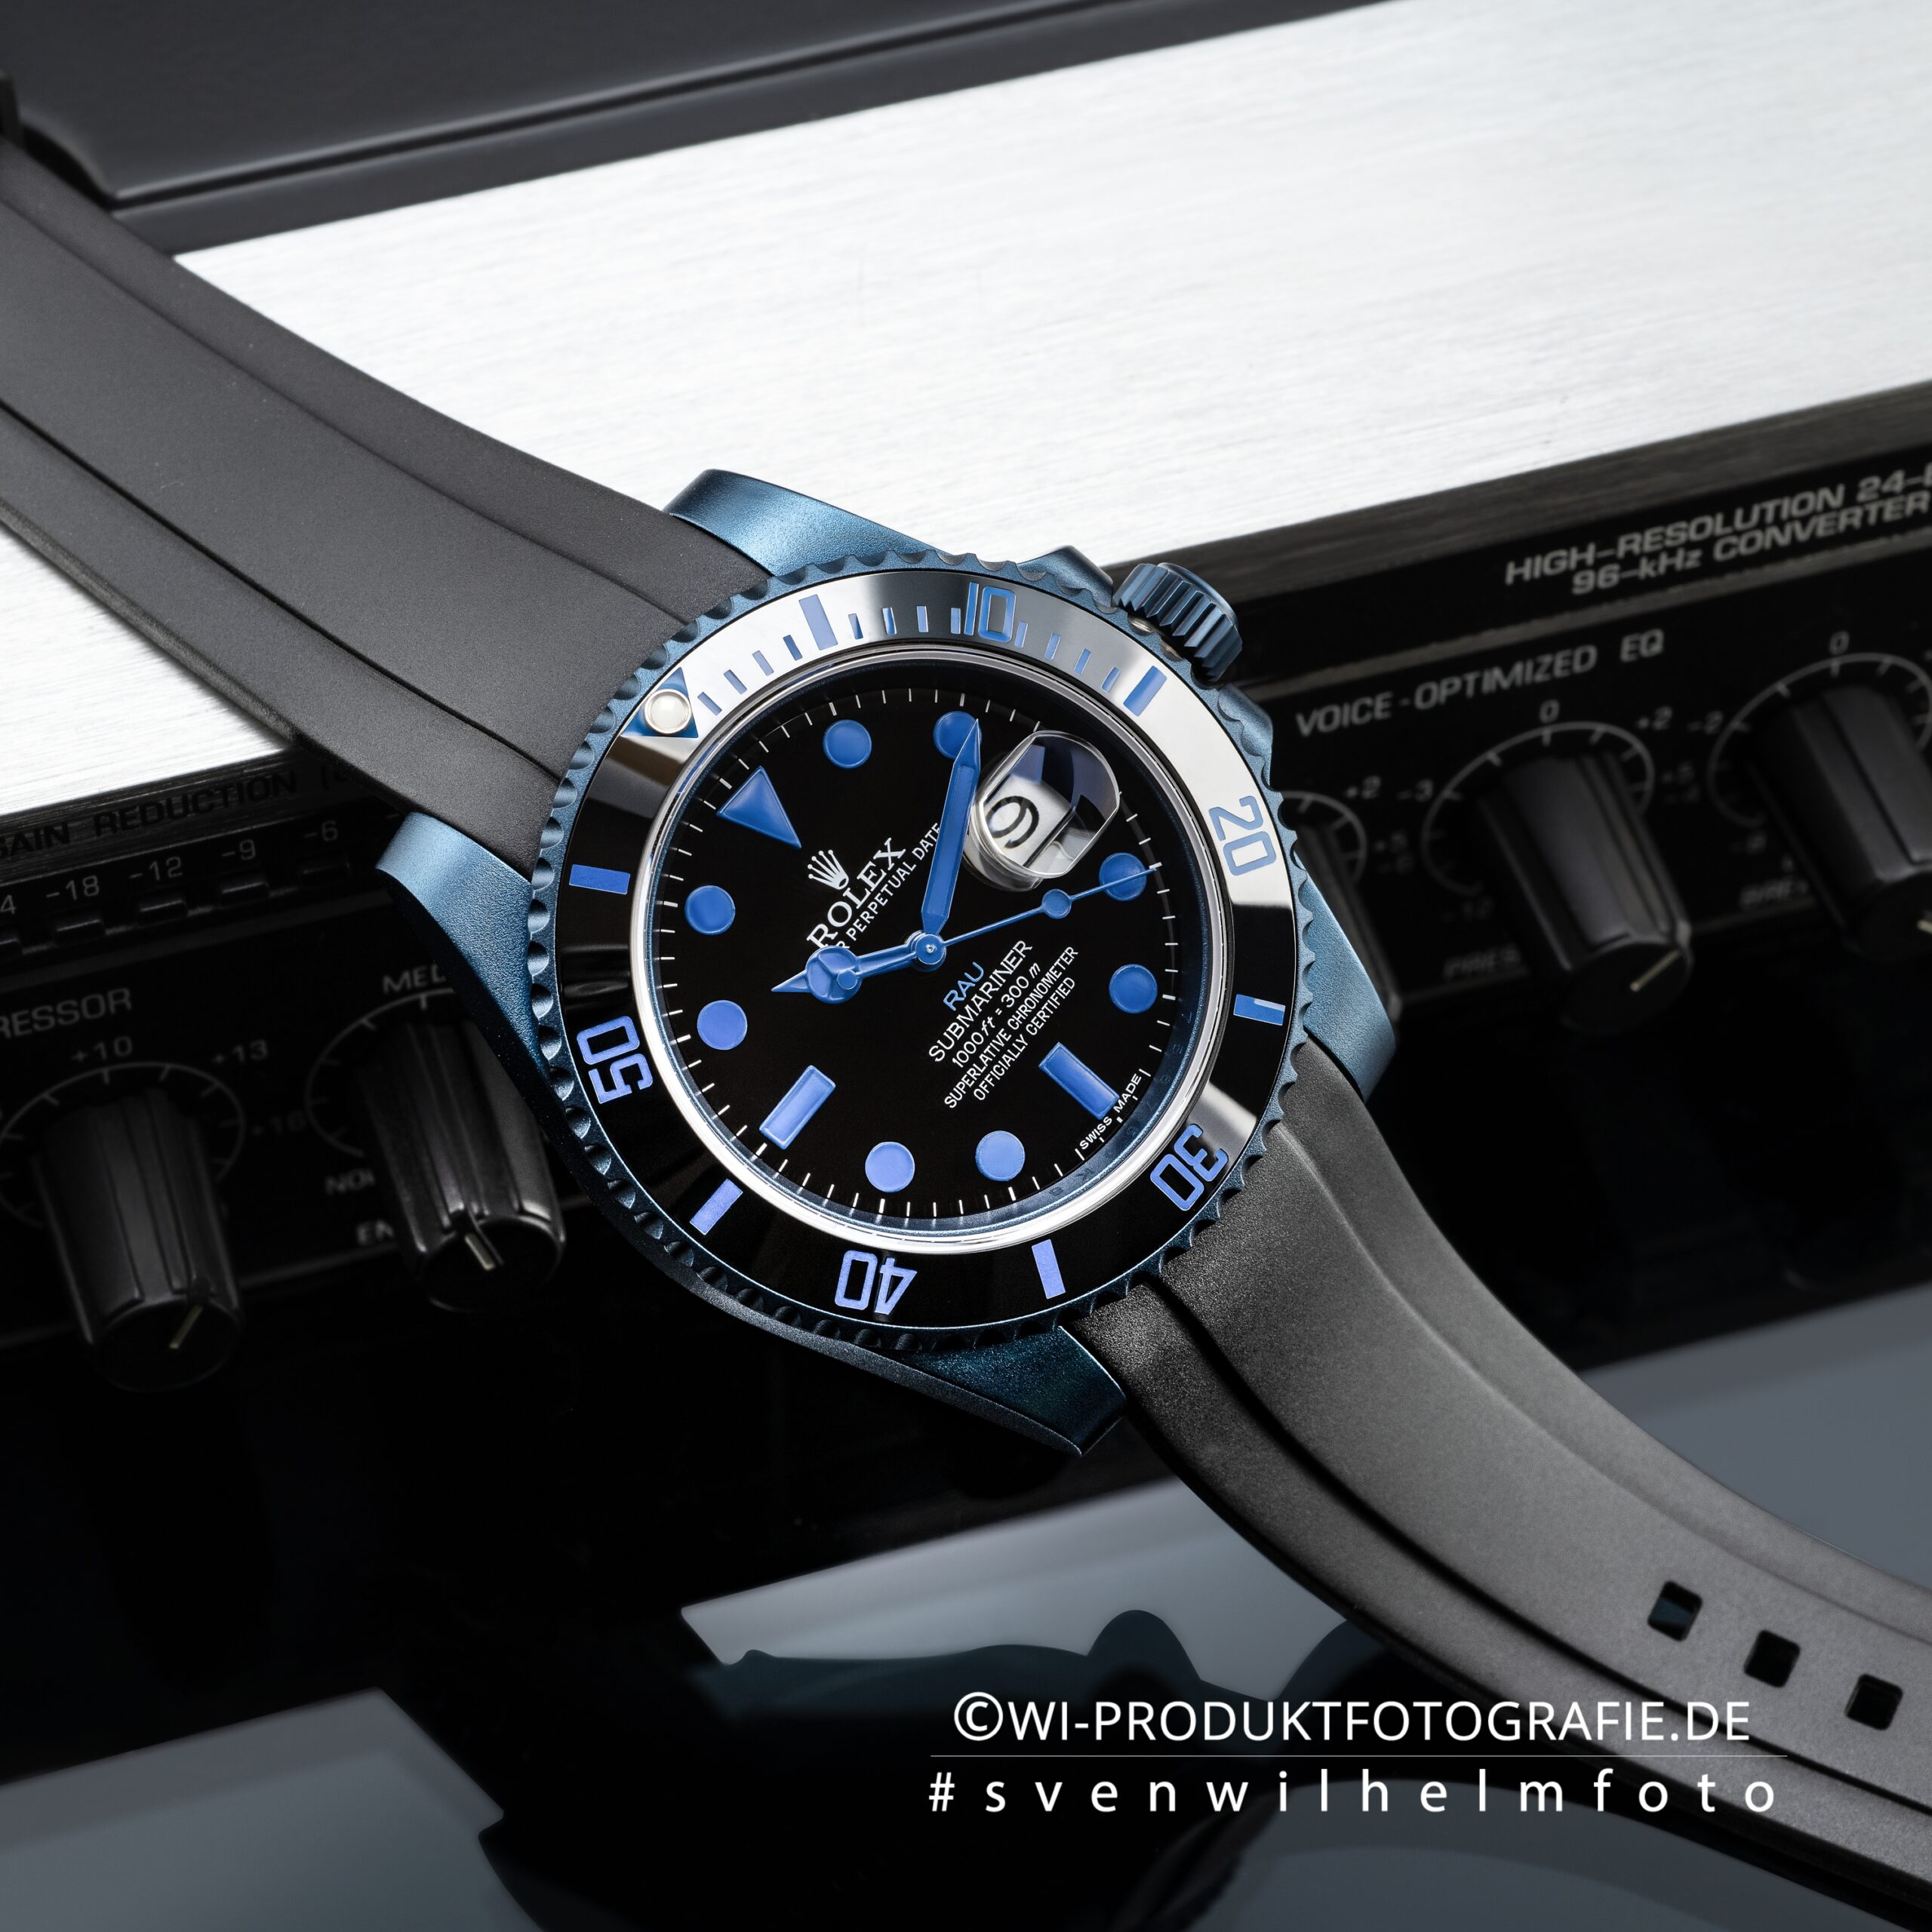 Uhrenfotograf Falk Rau Rolex Oyster Perpetual Modiefied Uhrenfotografie Professioneller Fotograf Uhren